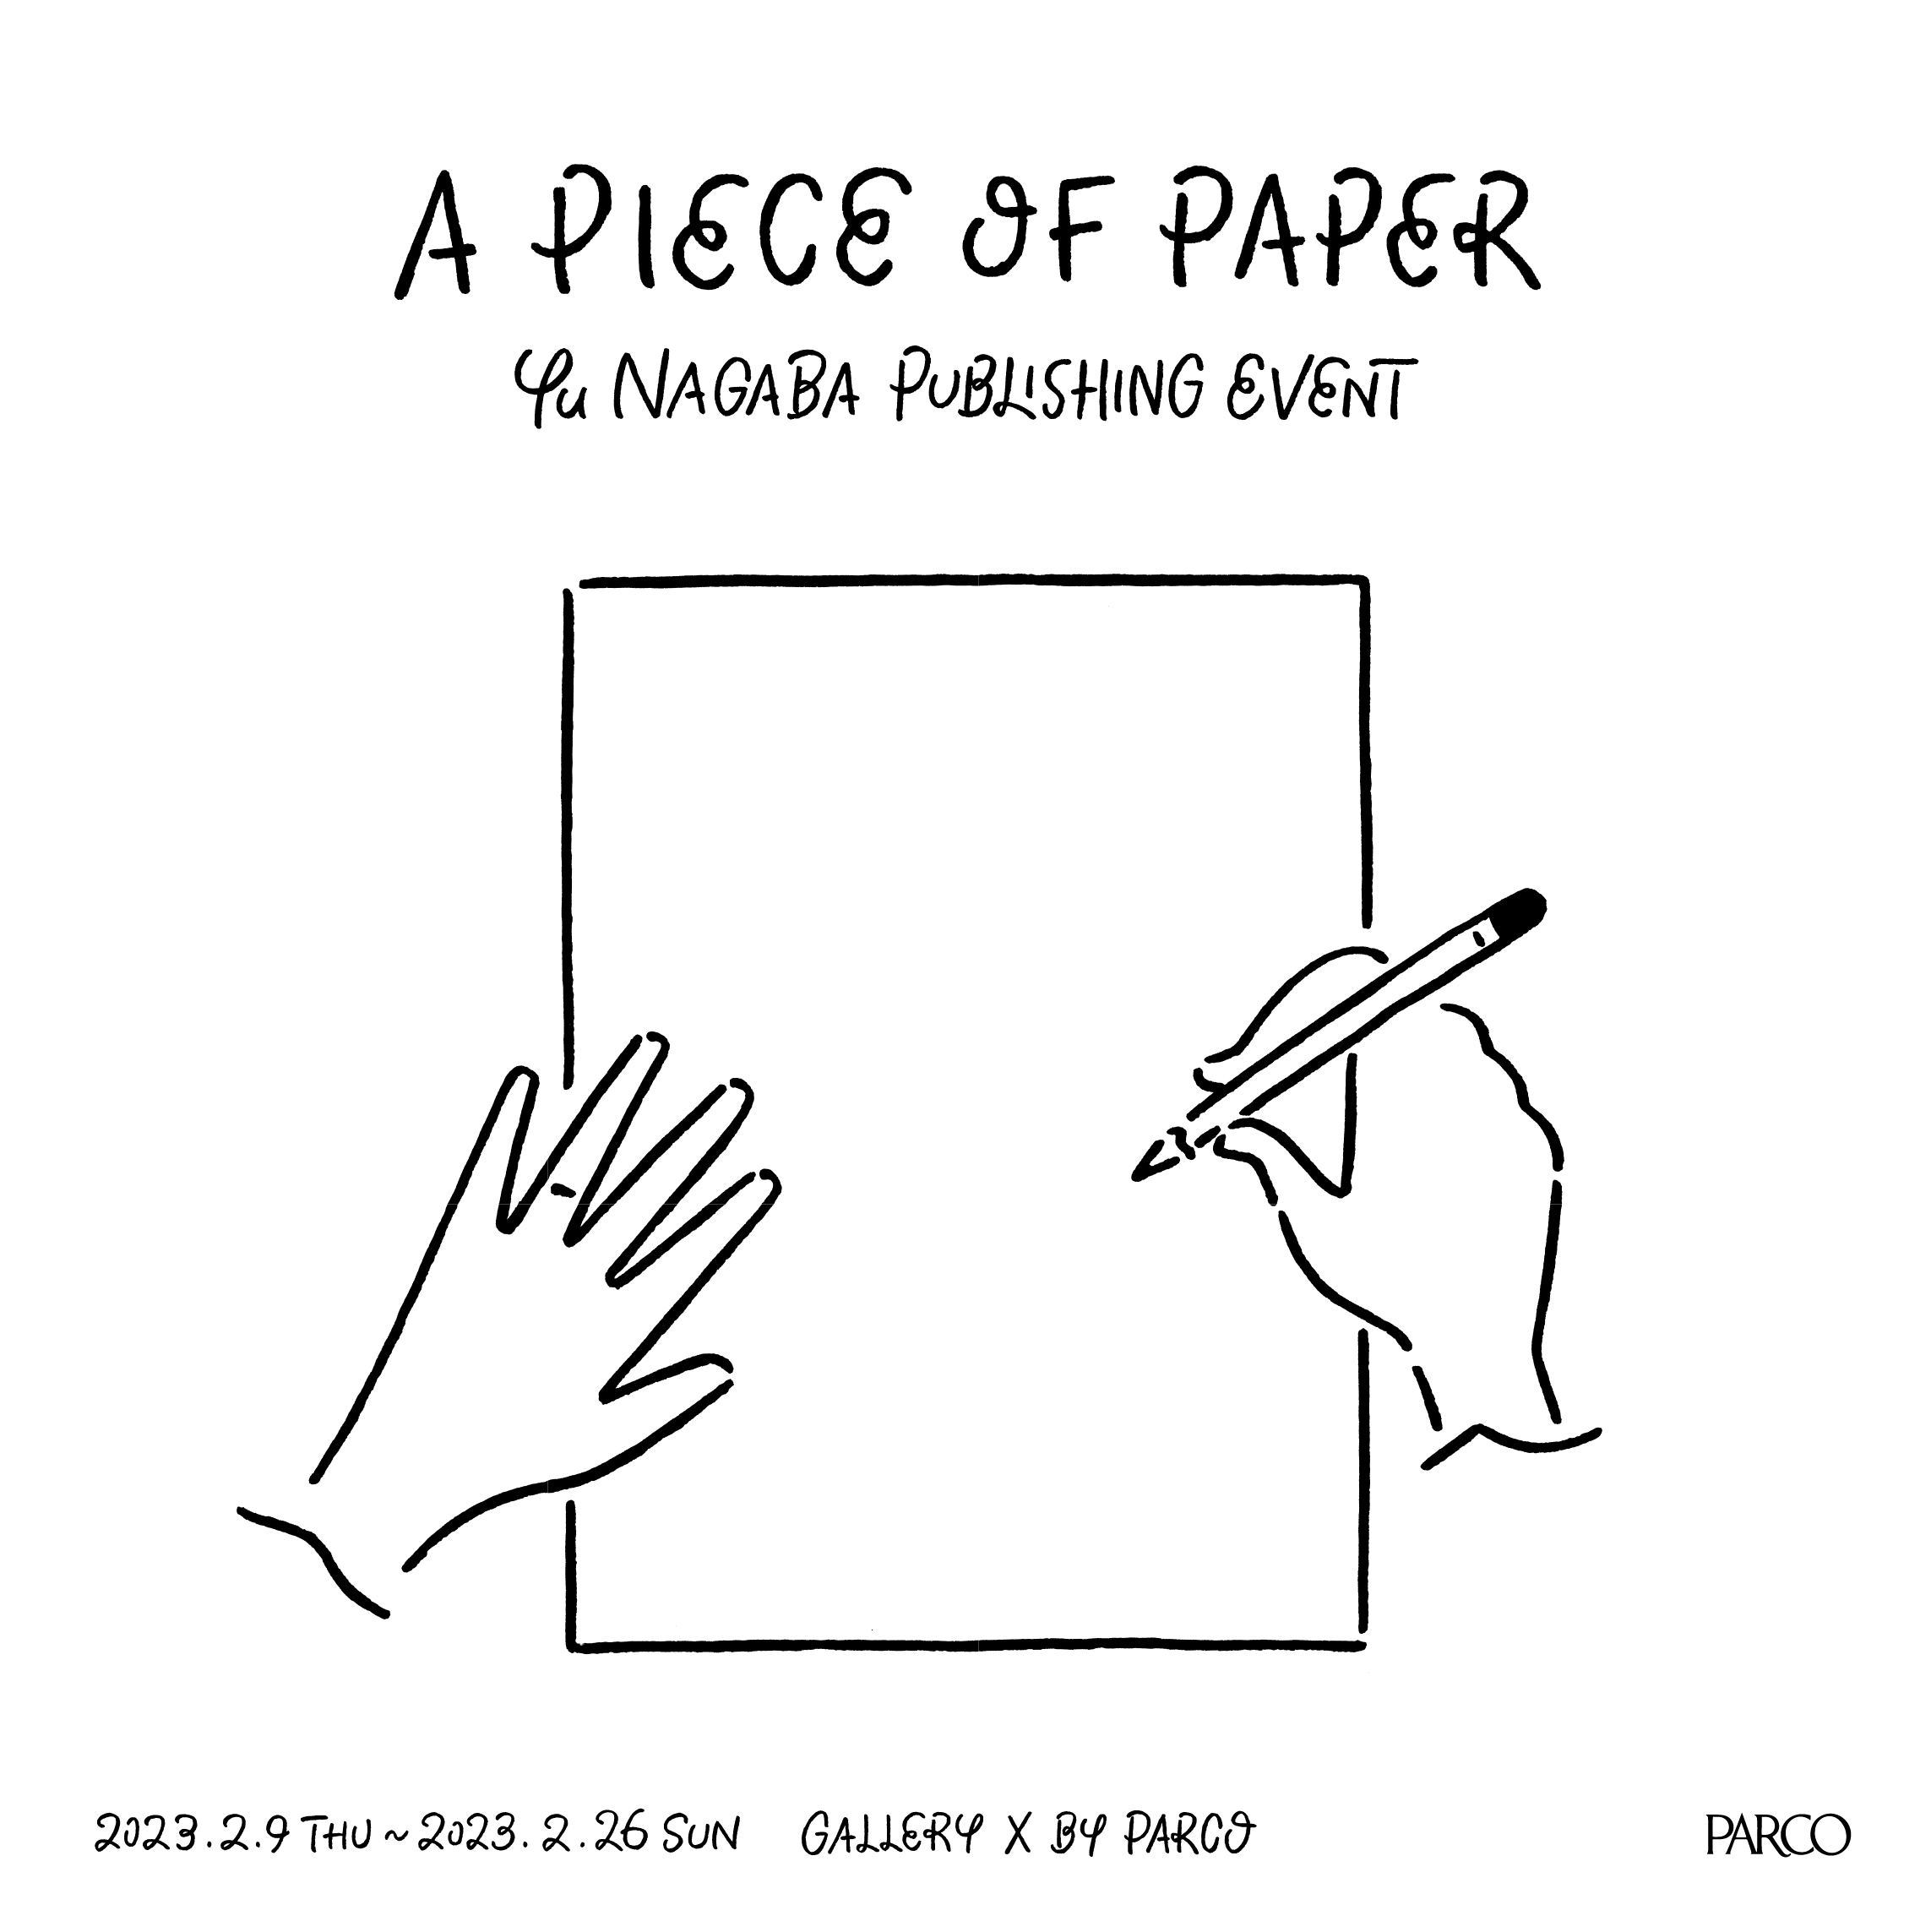 Yu Nagaba Puplishing Event "A PIECE OF PAPER“